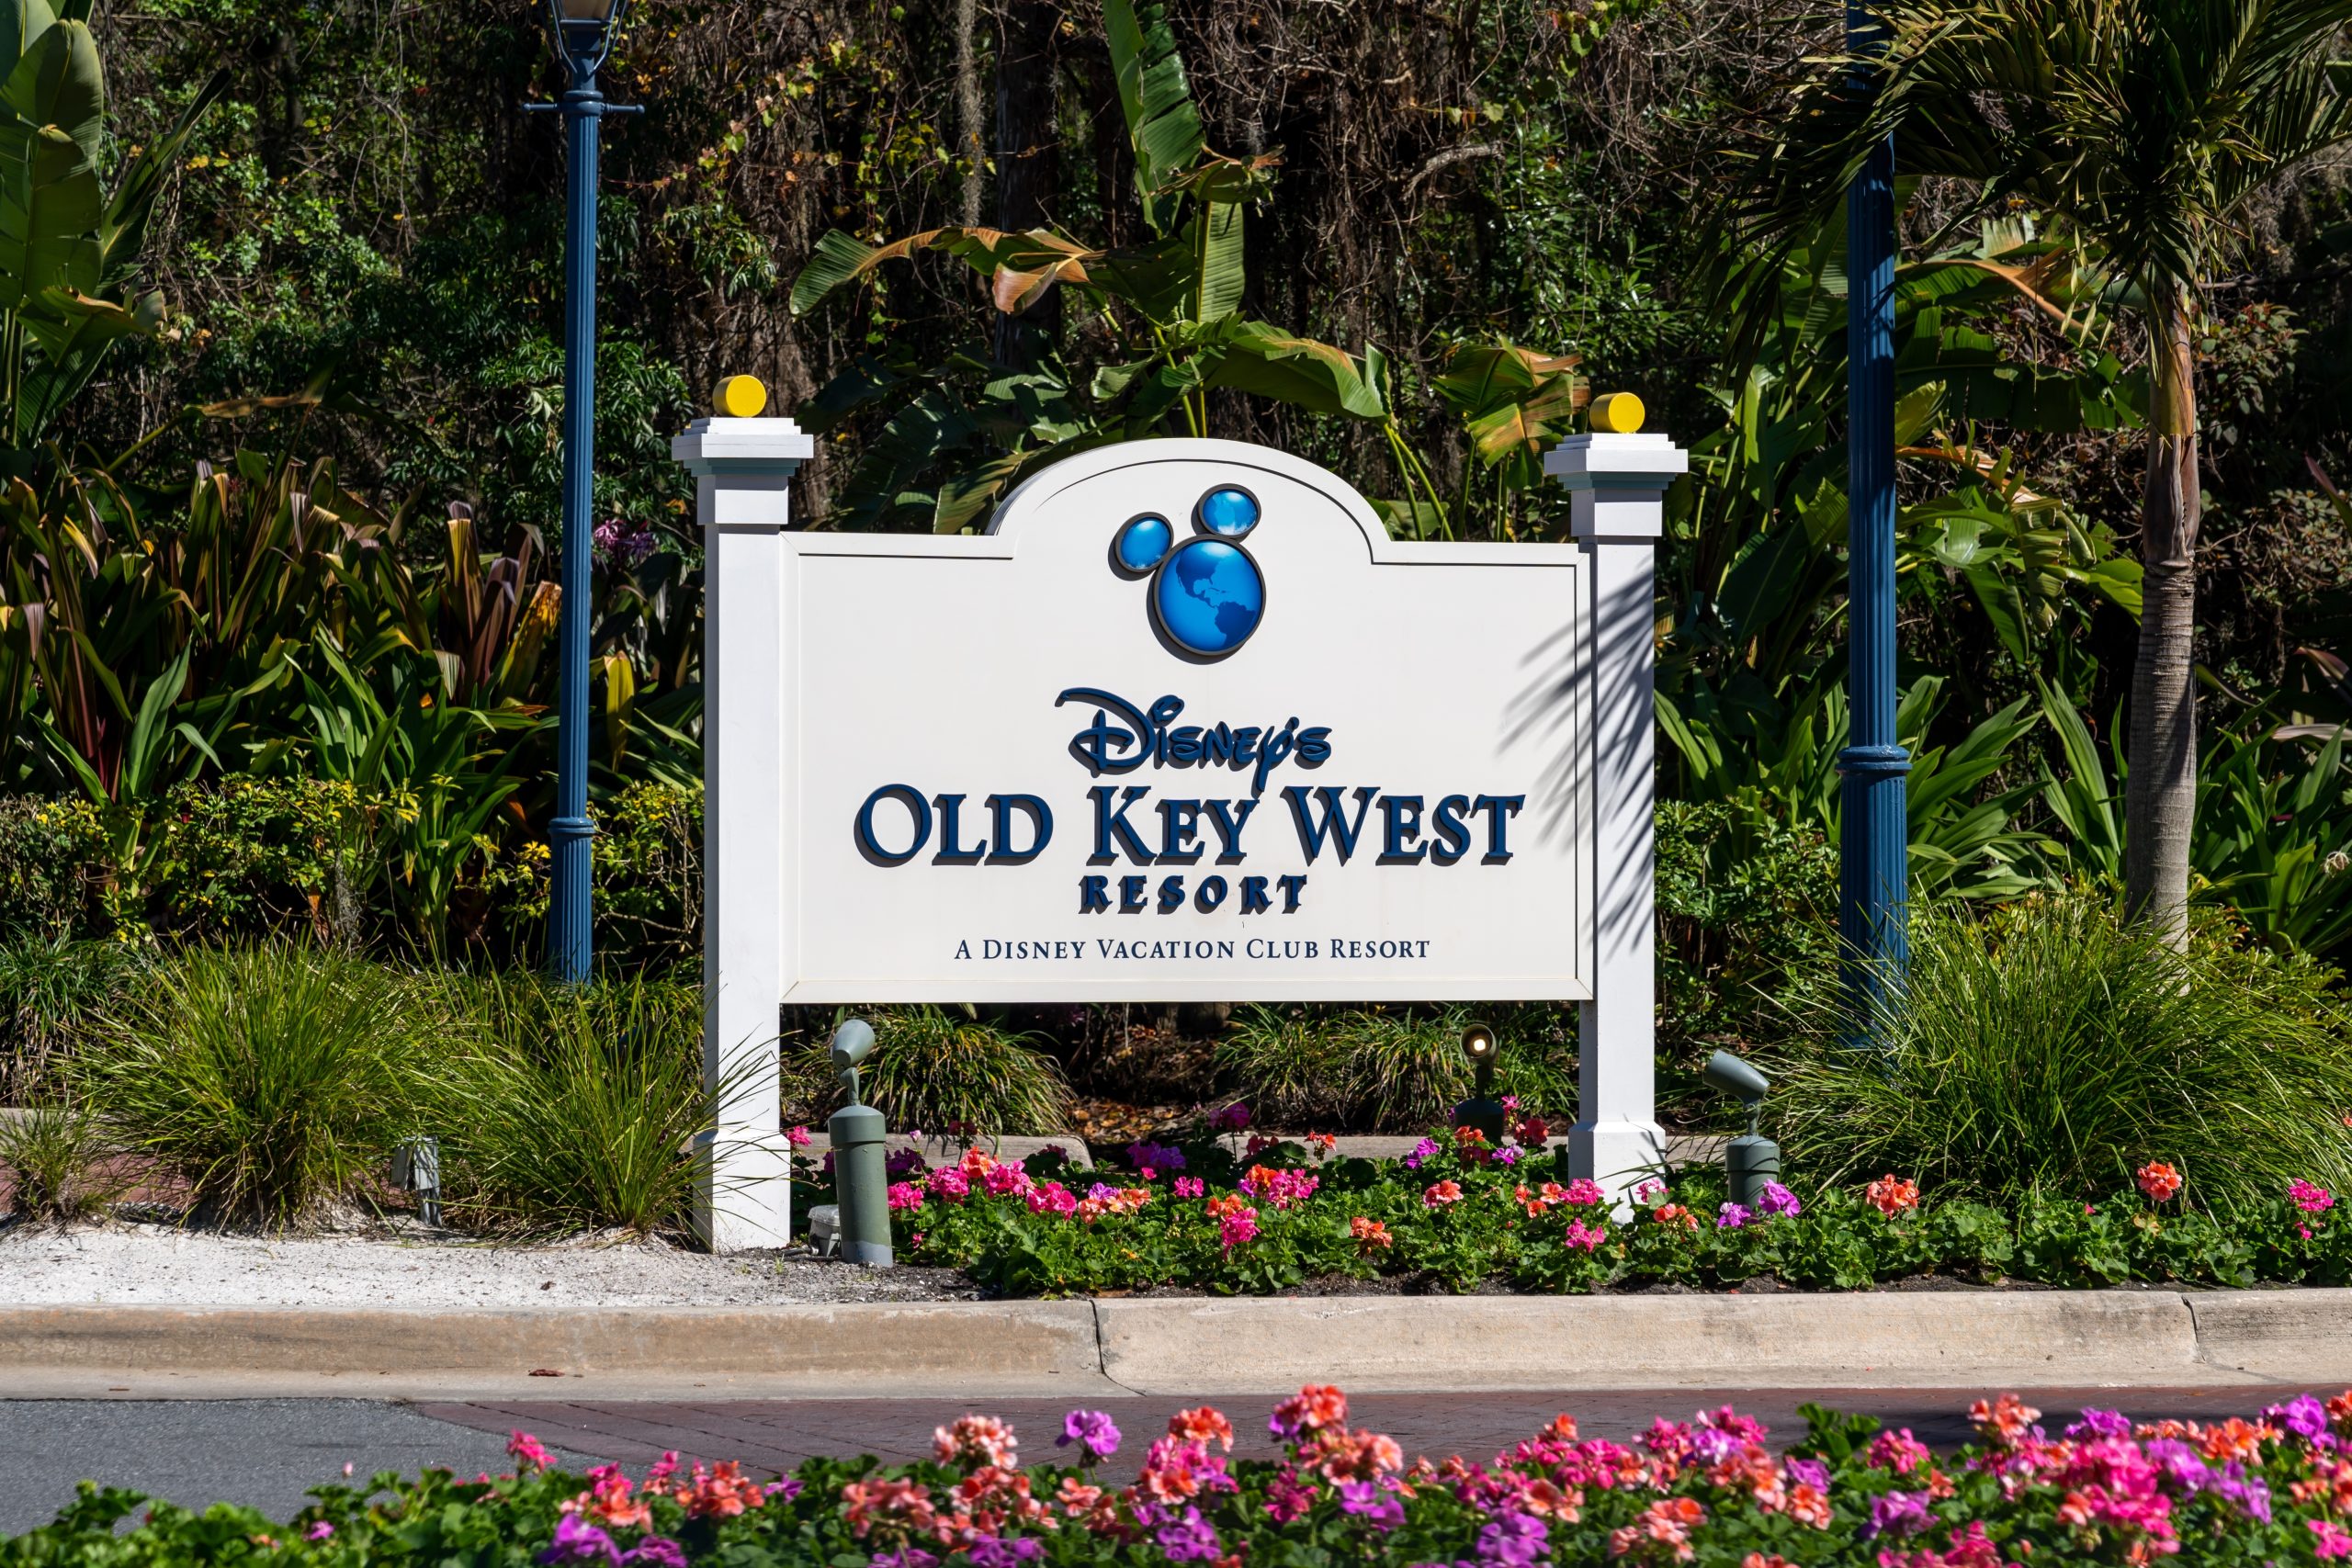 Disney's Old Key West Vacation Club Resort